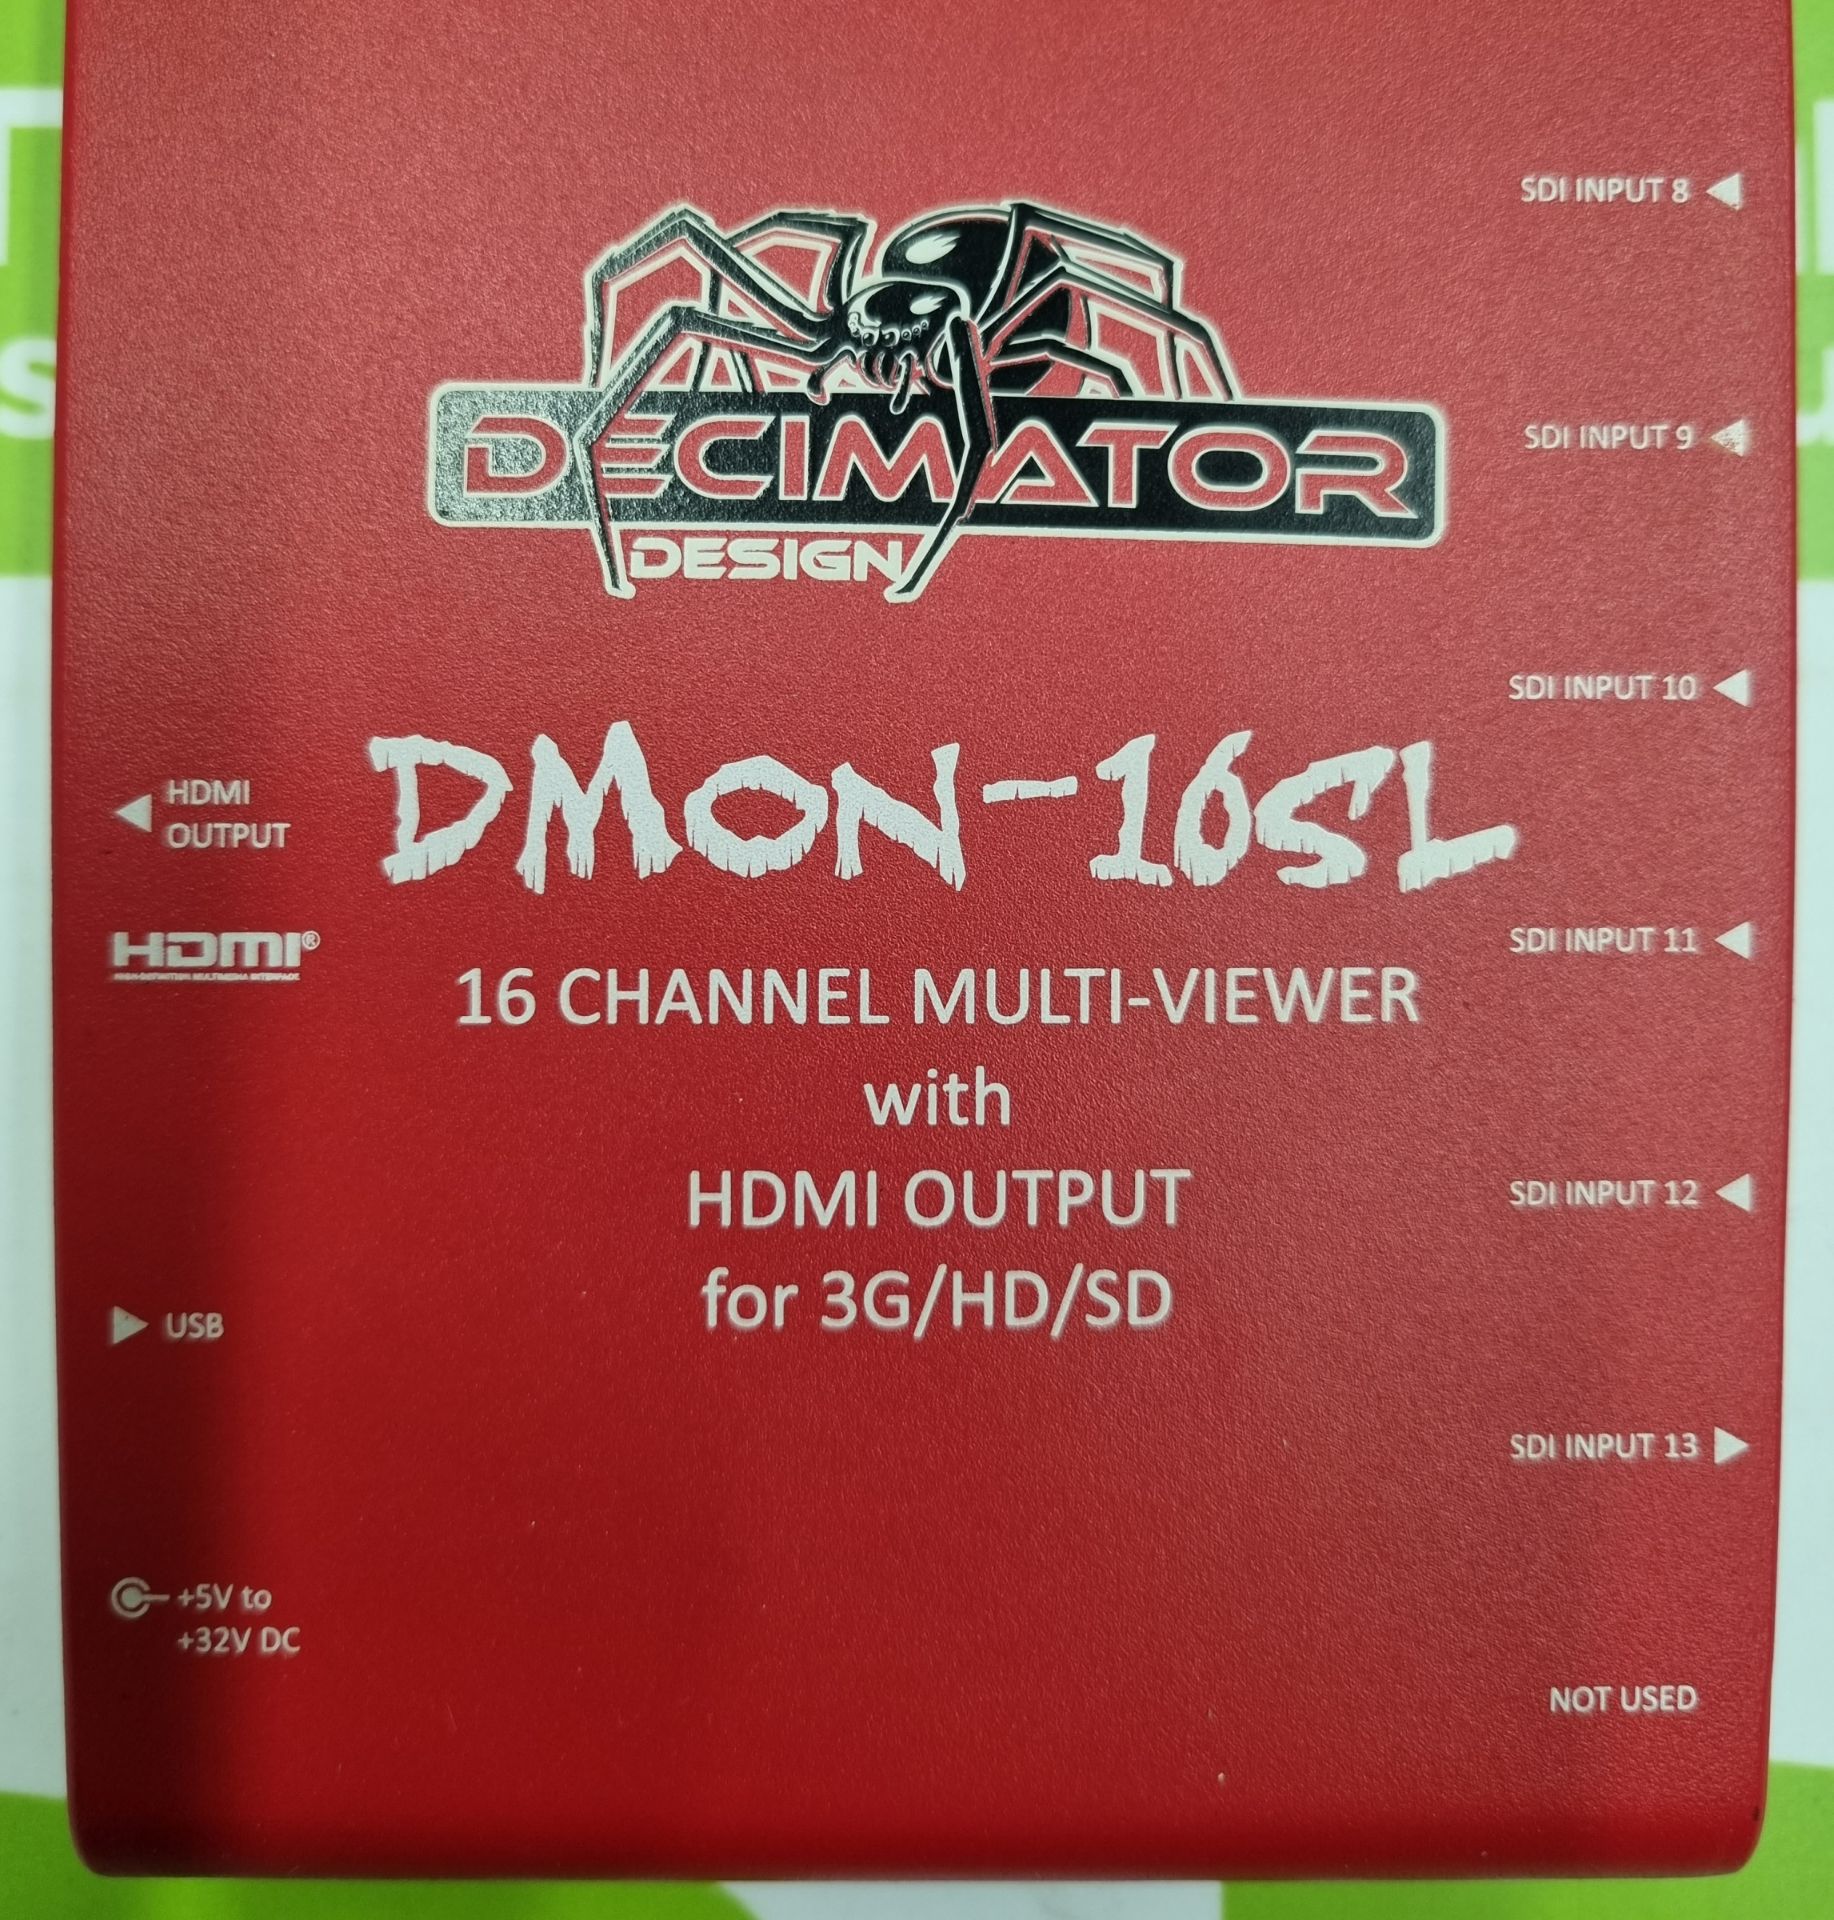 Decimator DMON-16SL - 16 way 4x4 SDI multi-viewer - Image 7 of 10